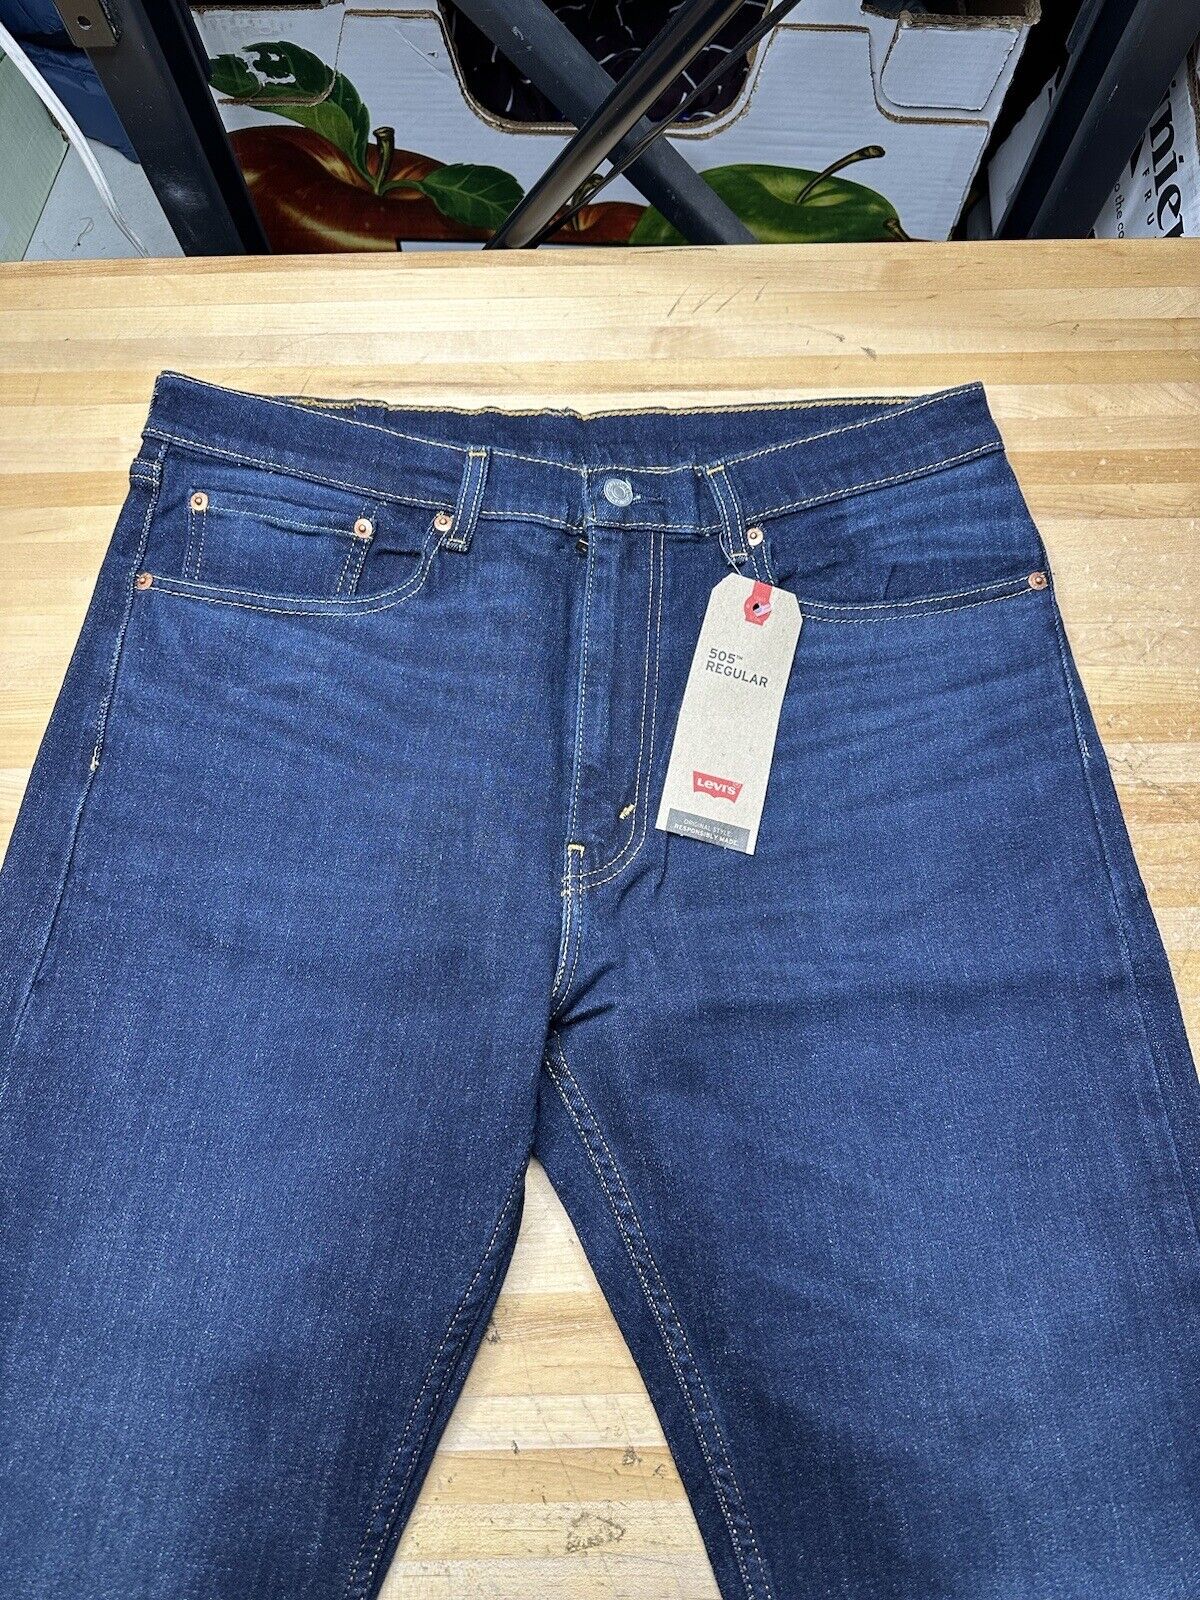 NEW Levis 505 Mens Jeans Regular Fit Straight Leg 36X30 505-2122 | eBay